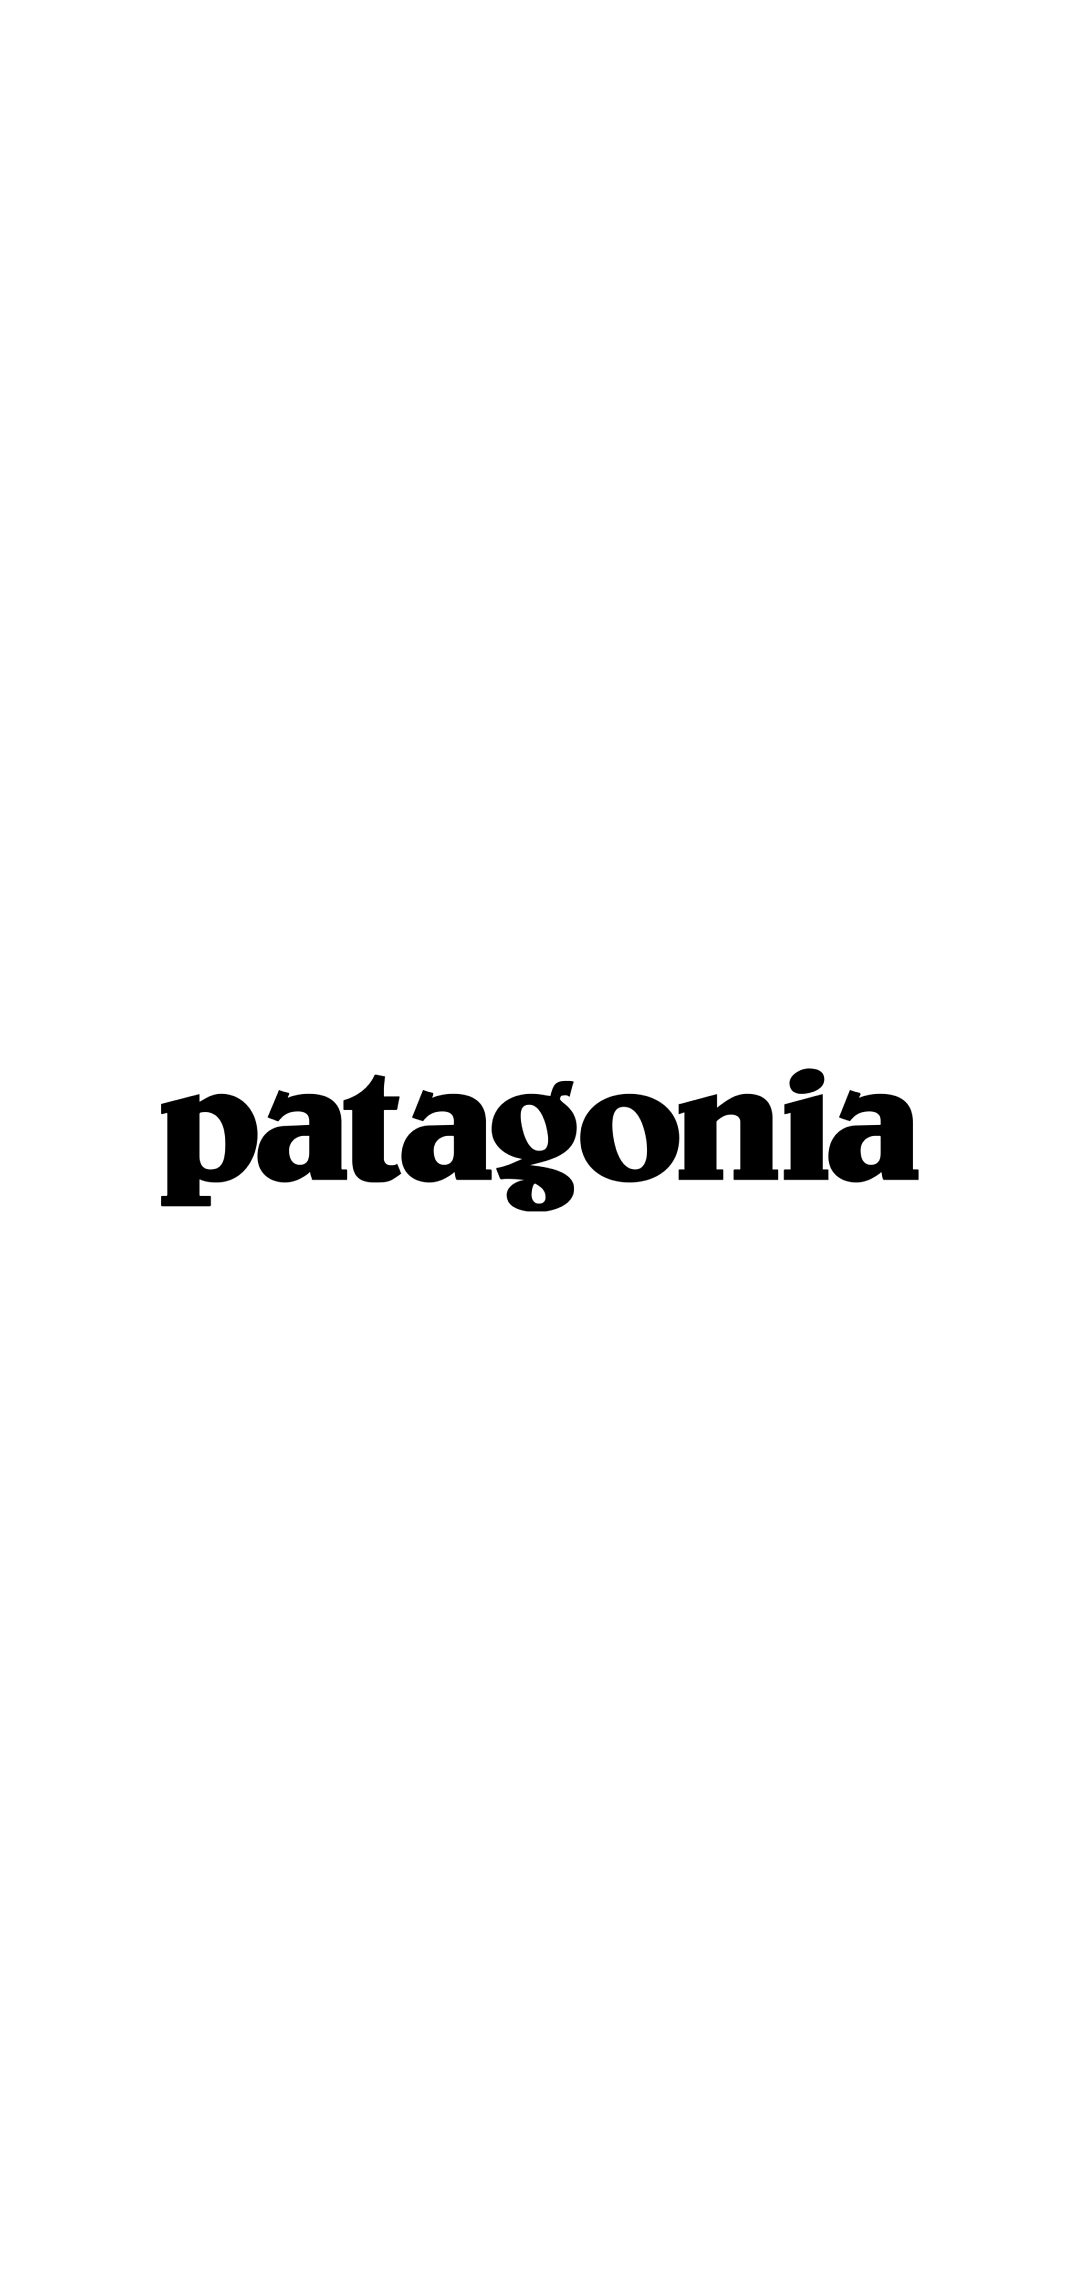 Patagonia パタゴニア Aquos R2 Compact スマホ壁紙 待ち受け スマラン